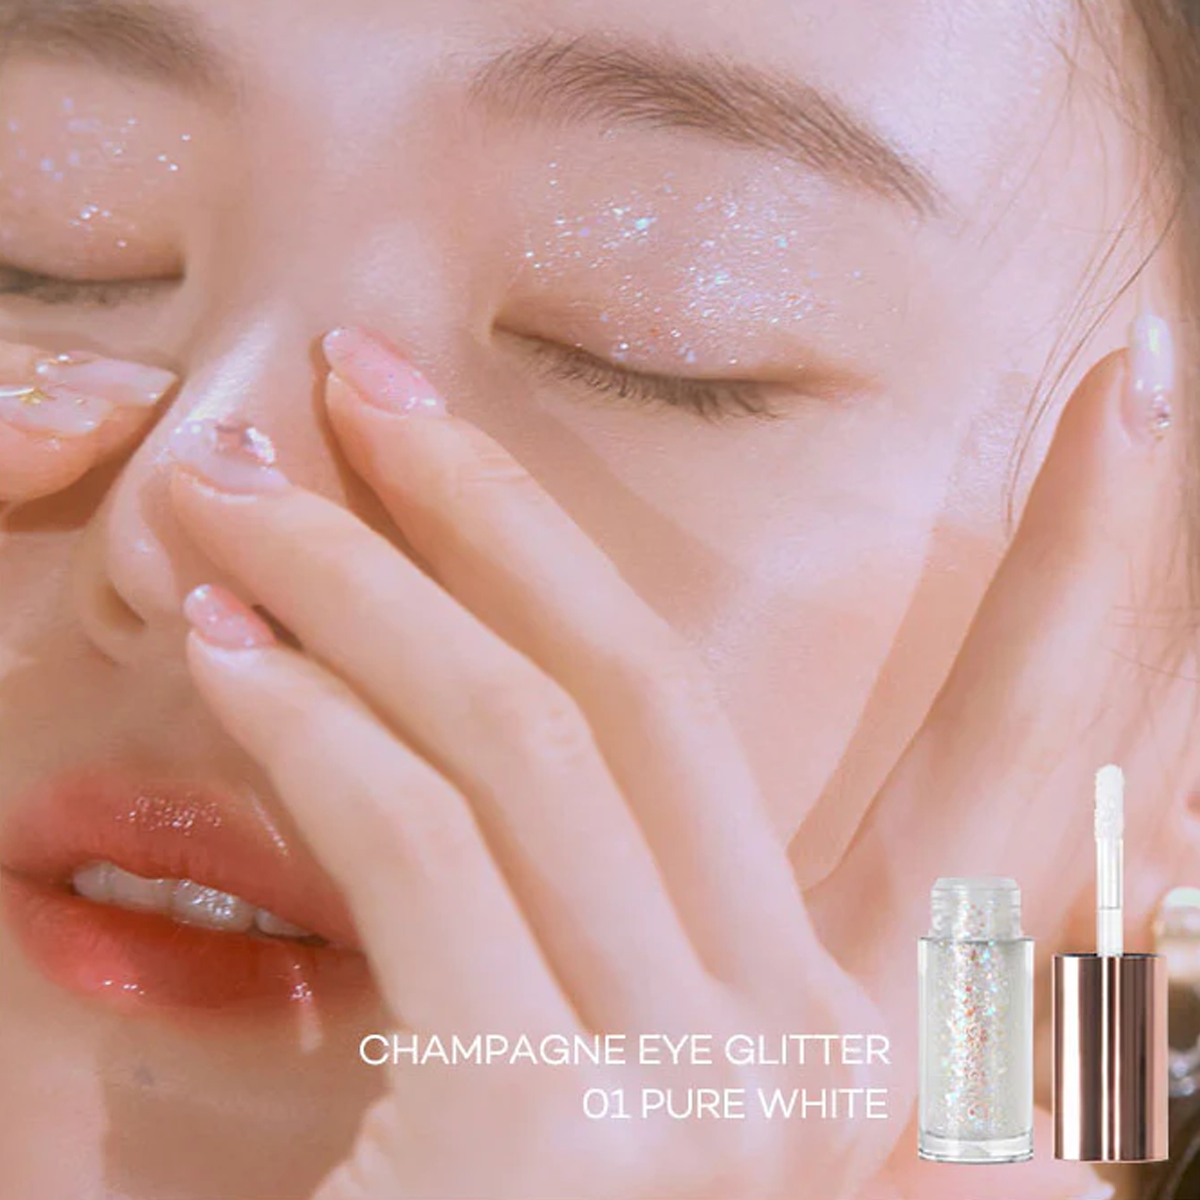 Peach C - Champagne Eye Glitter - high-impact eye glitter - long-lasting adherence - non-irritating formula on top of holographic glow